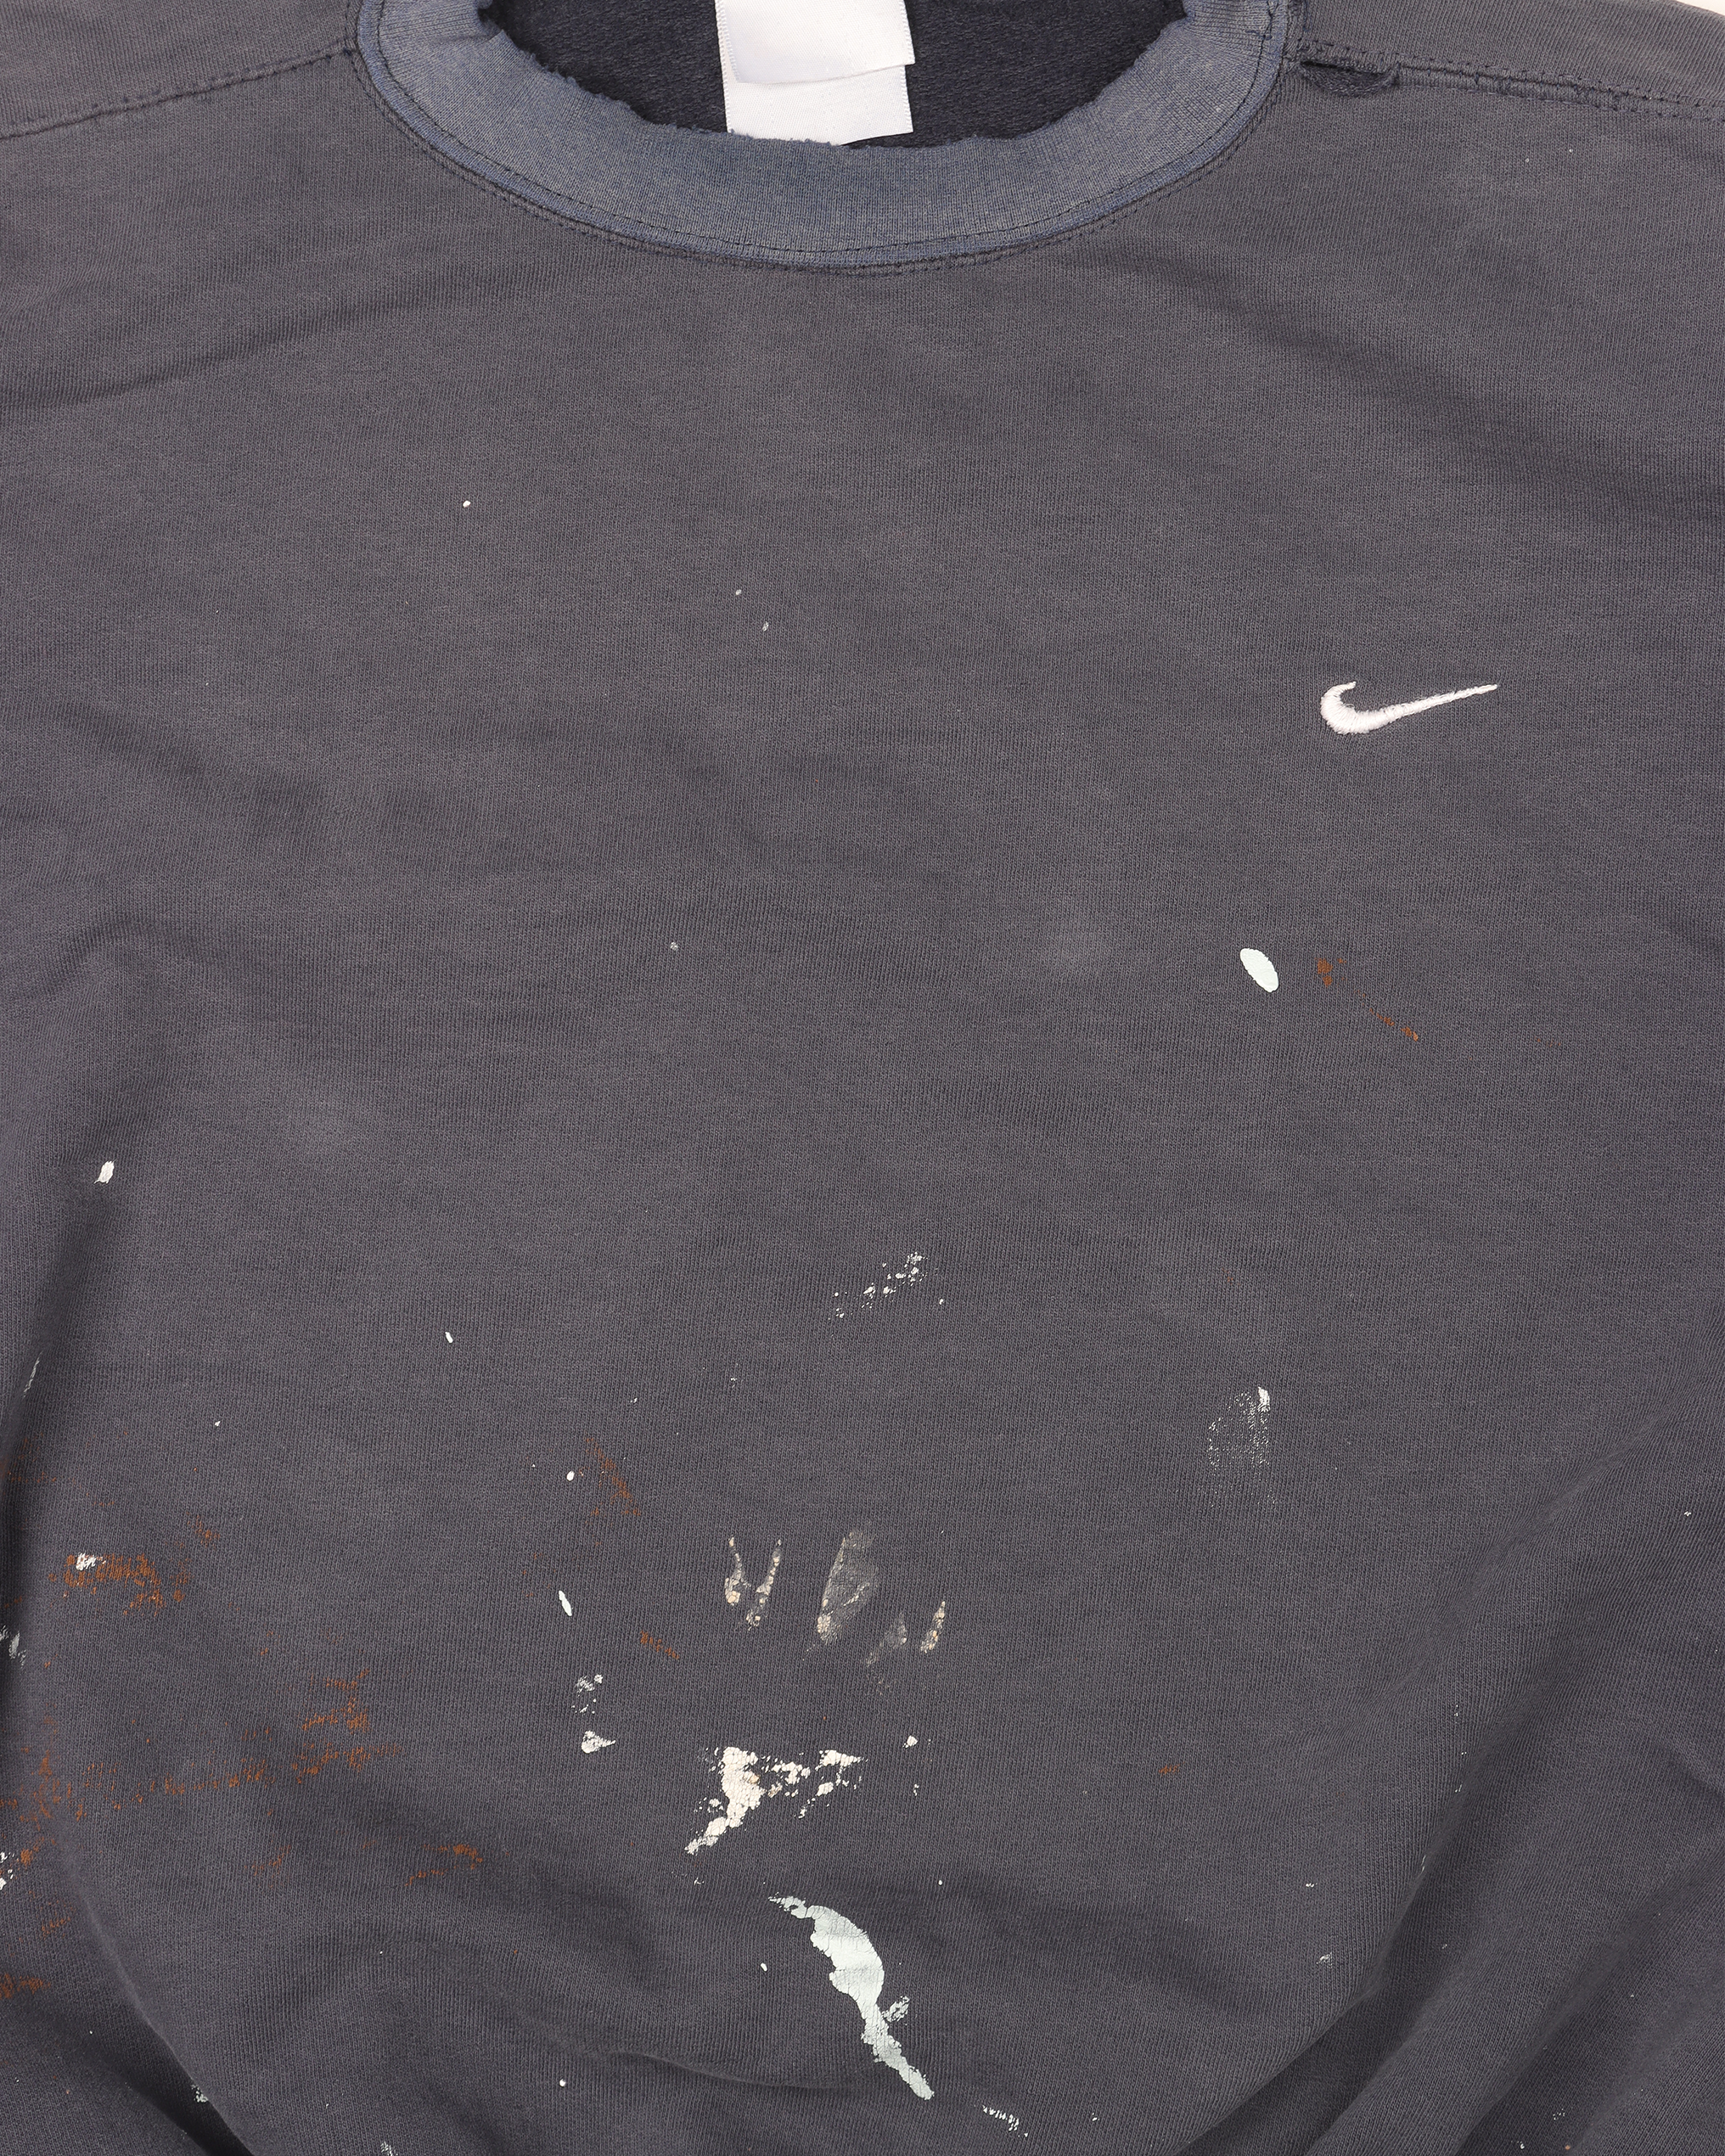 1990's Nike Painter Crewneck Sweatshirt